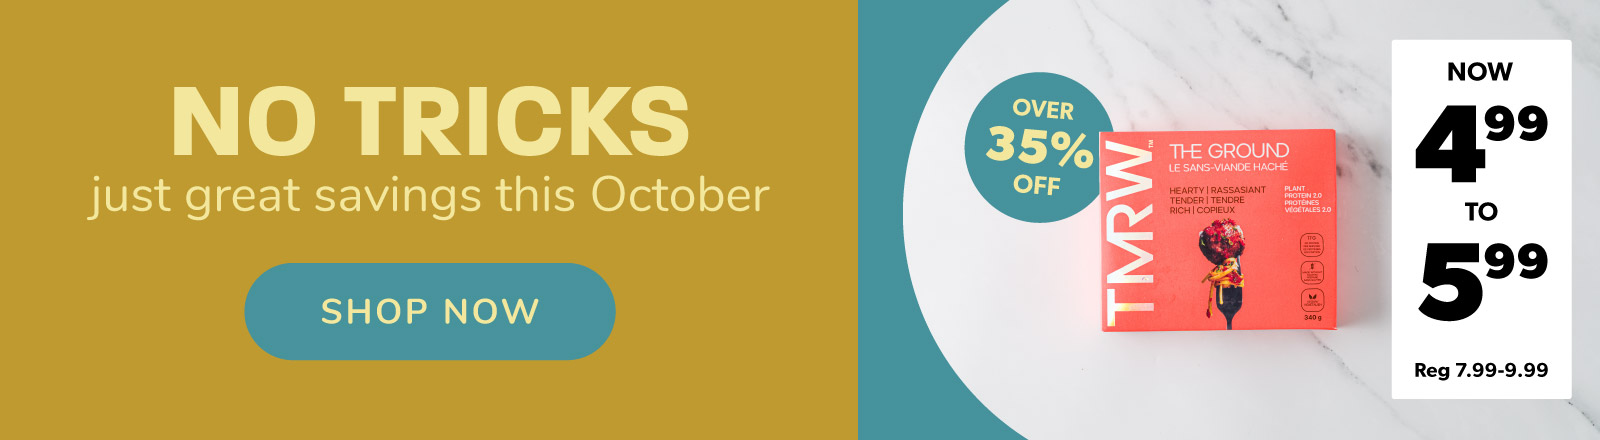 No Tricks just great savings this October on TMRW foods